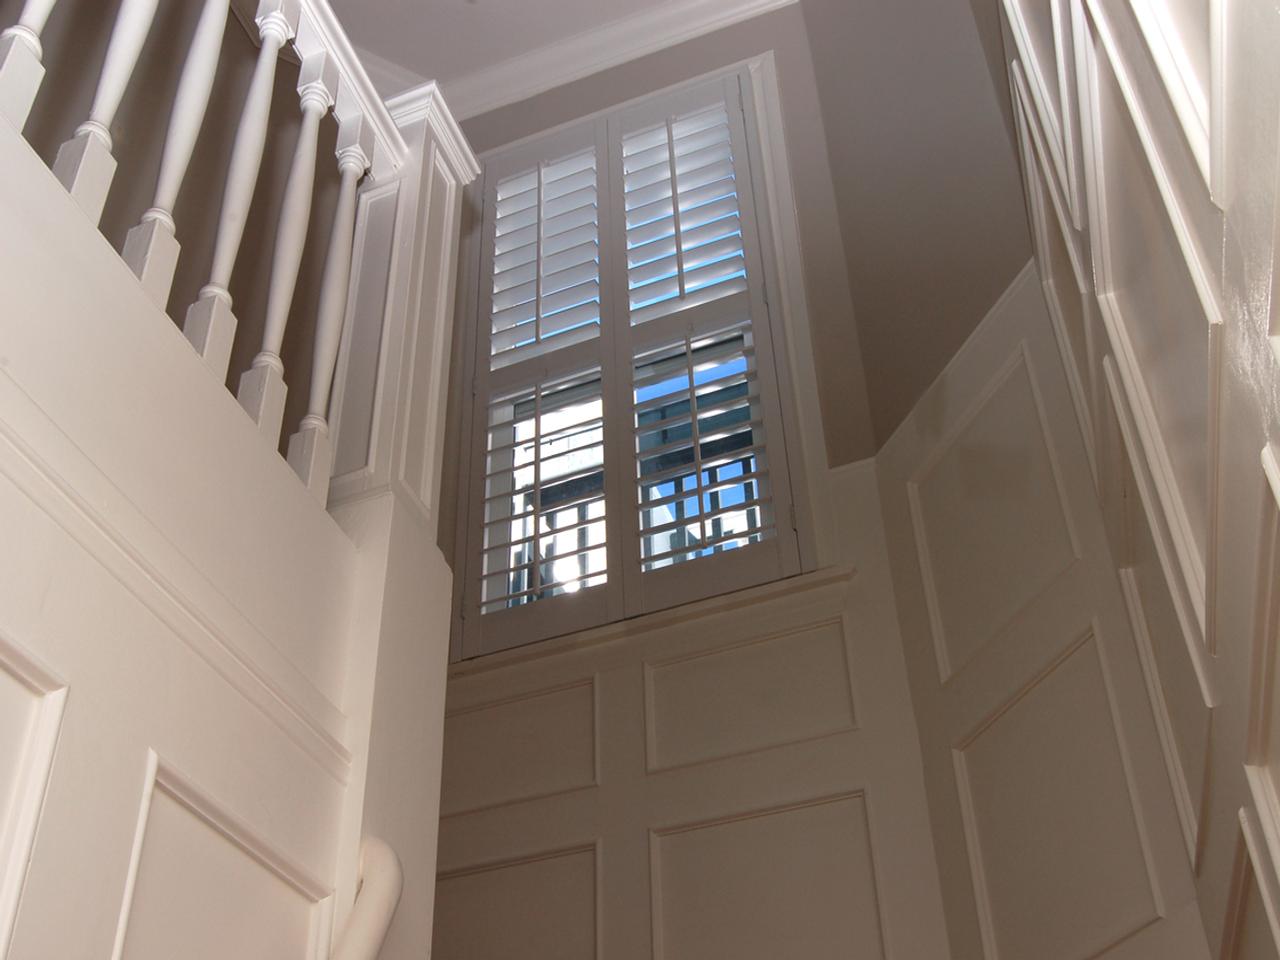 Interior shutters in a stairway